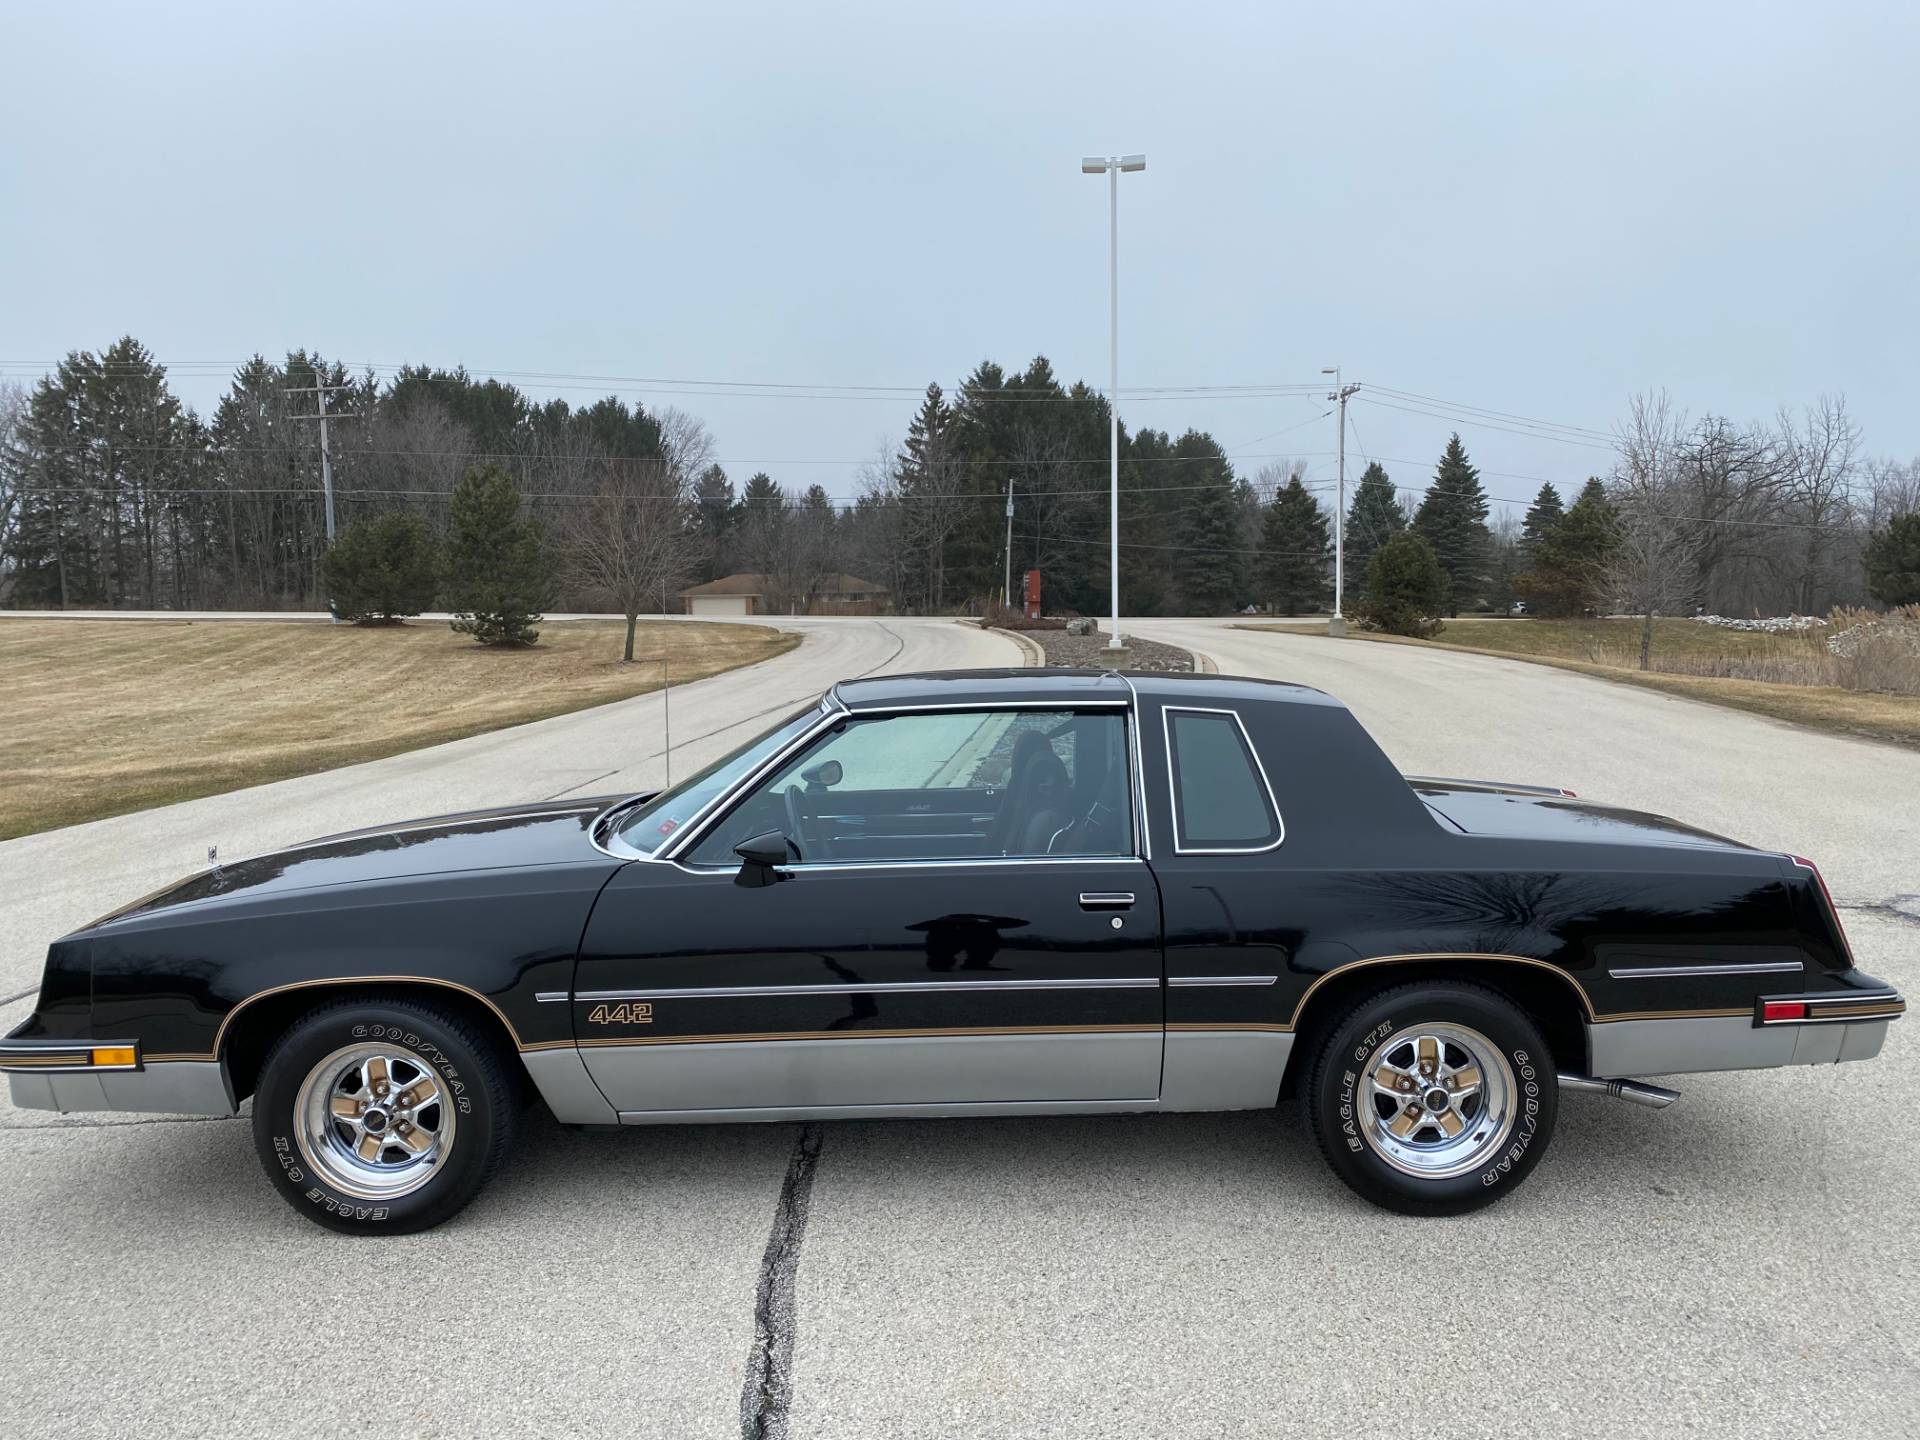 Used 1985 Oldsmobile Cutlass Salon 442 | Automobile in Big Bend WI | 4029  Black/Silver